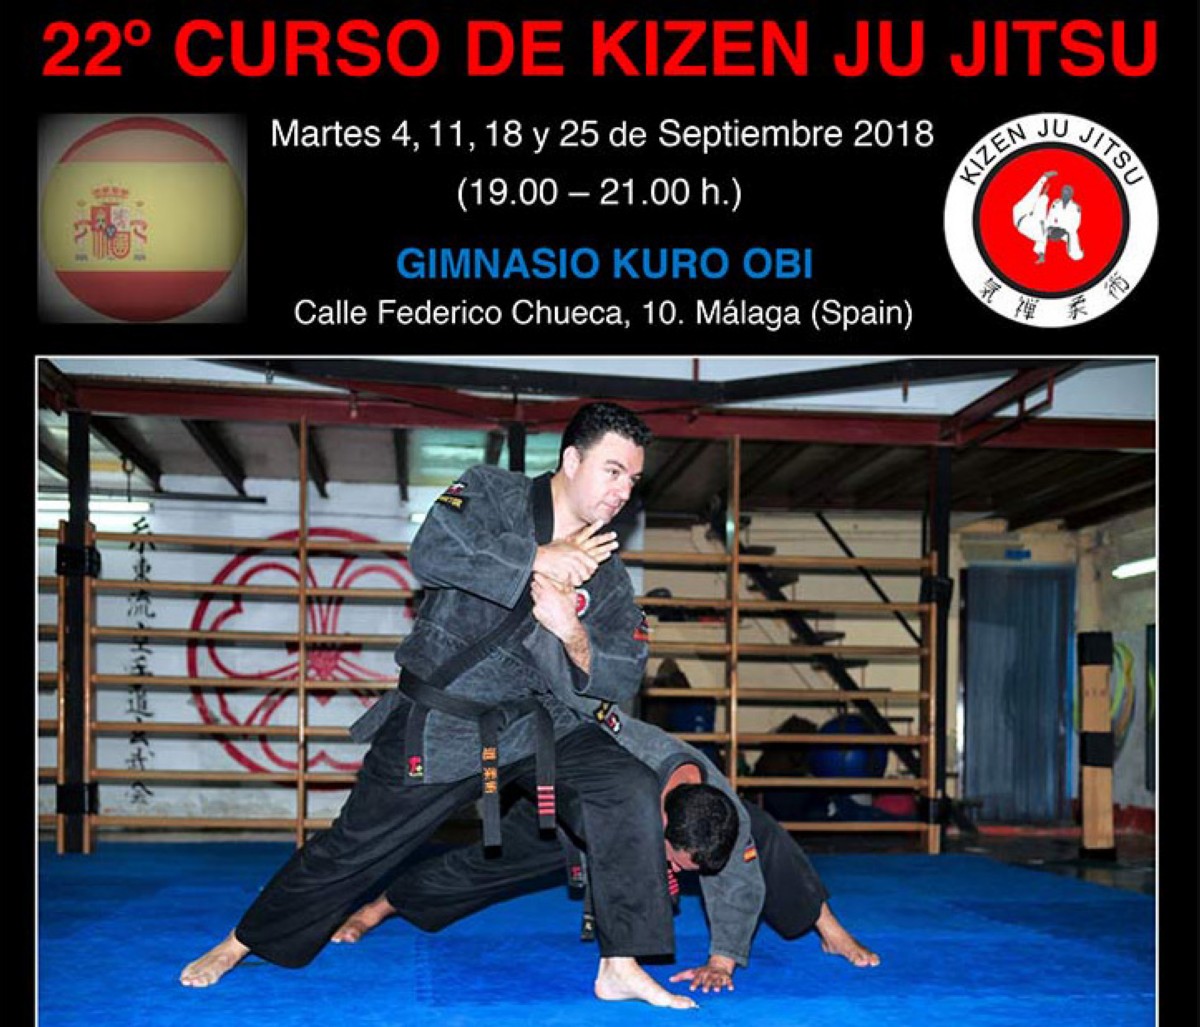 22º Curso de Kizen Ju Jitsu